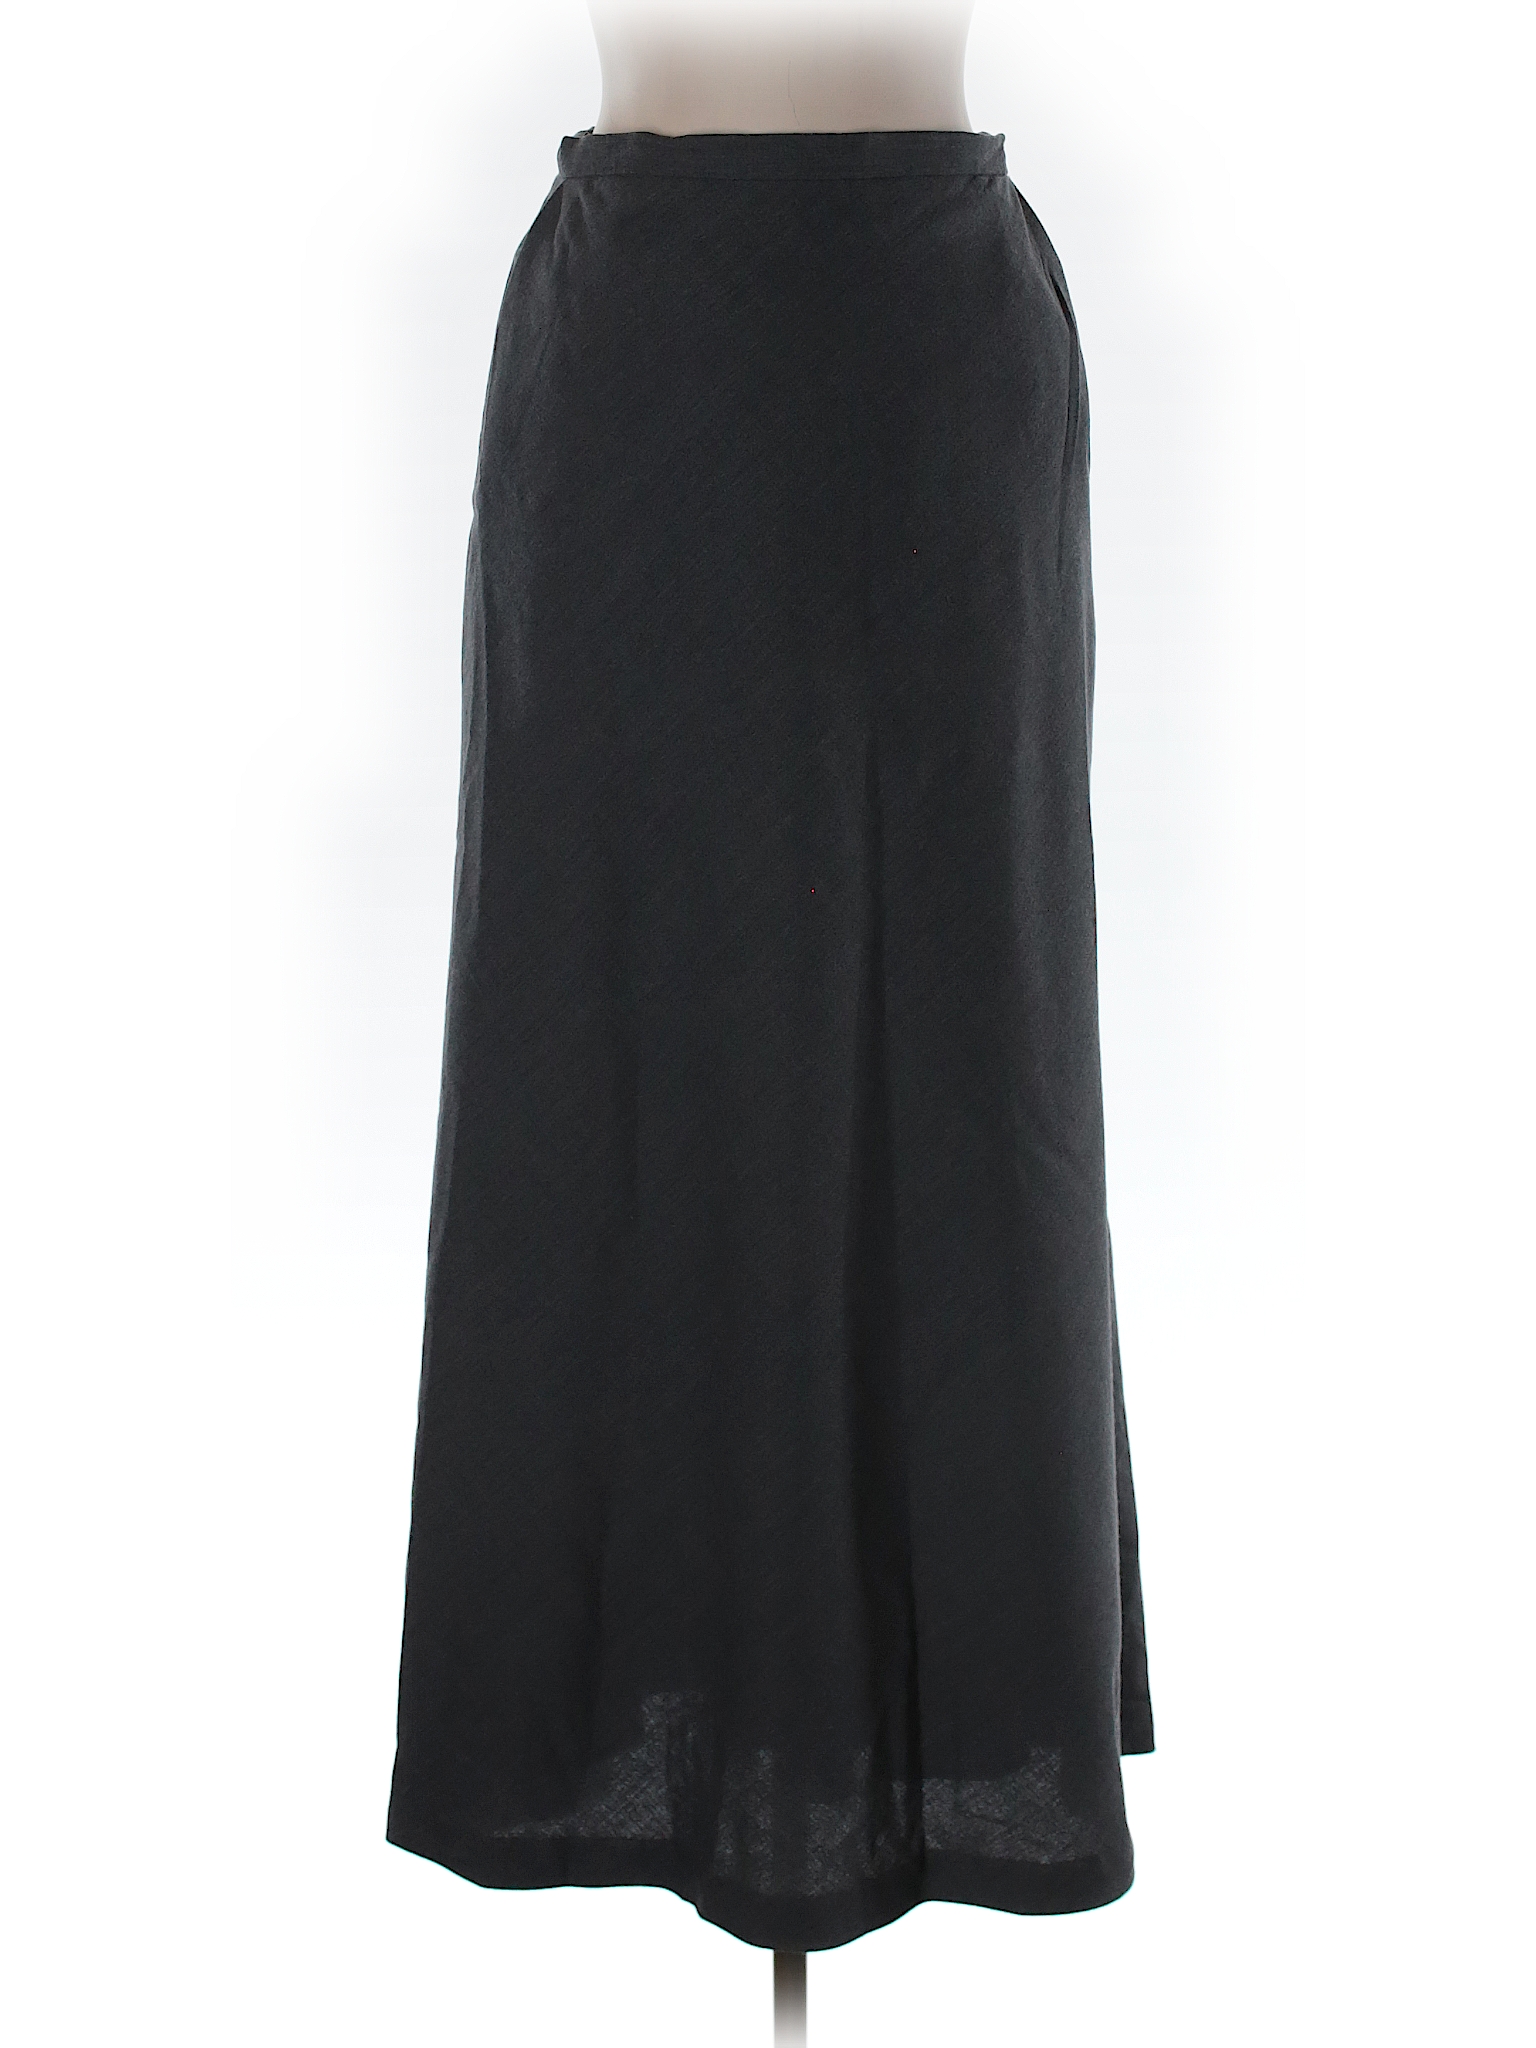 Lauren By Ralph Lauren Wool Skirt - 75% off only on thredUP